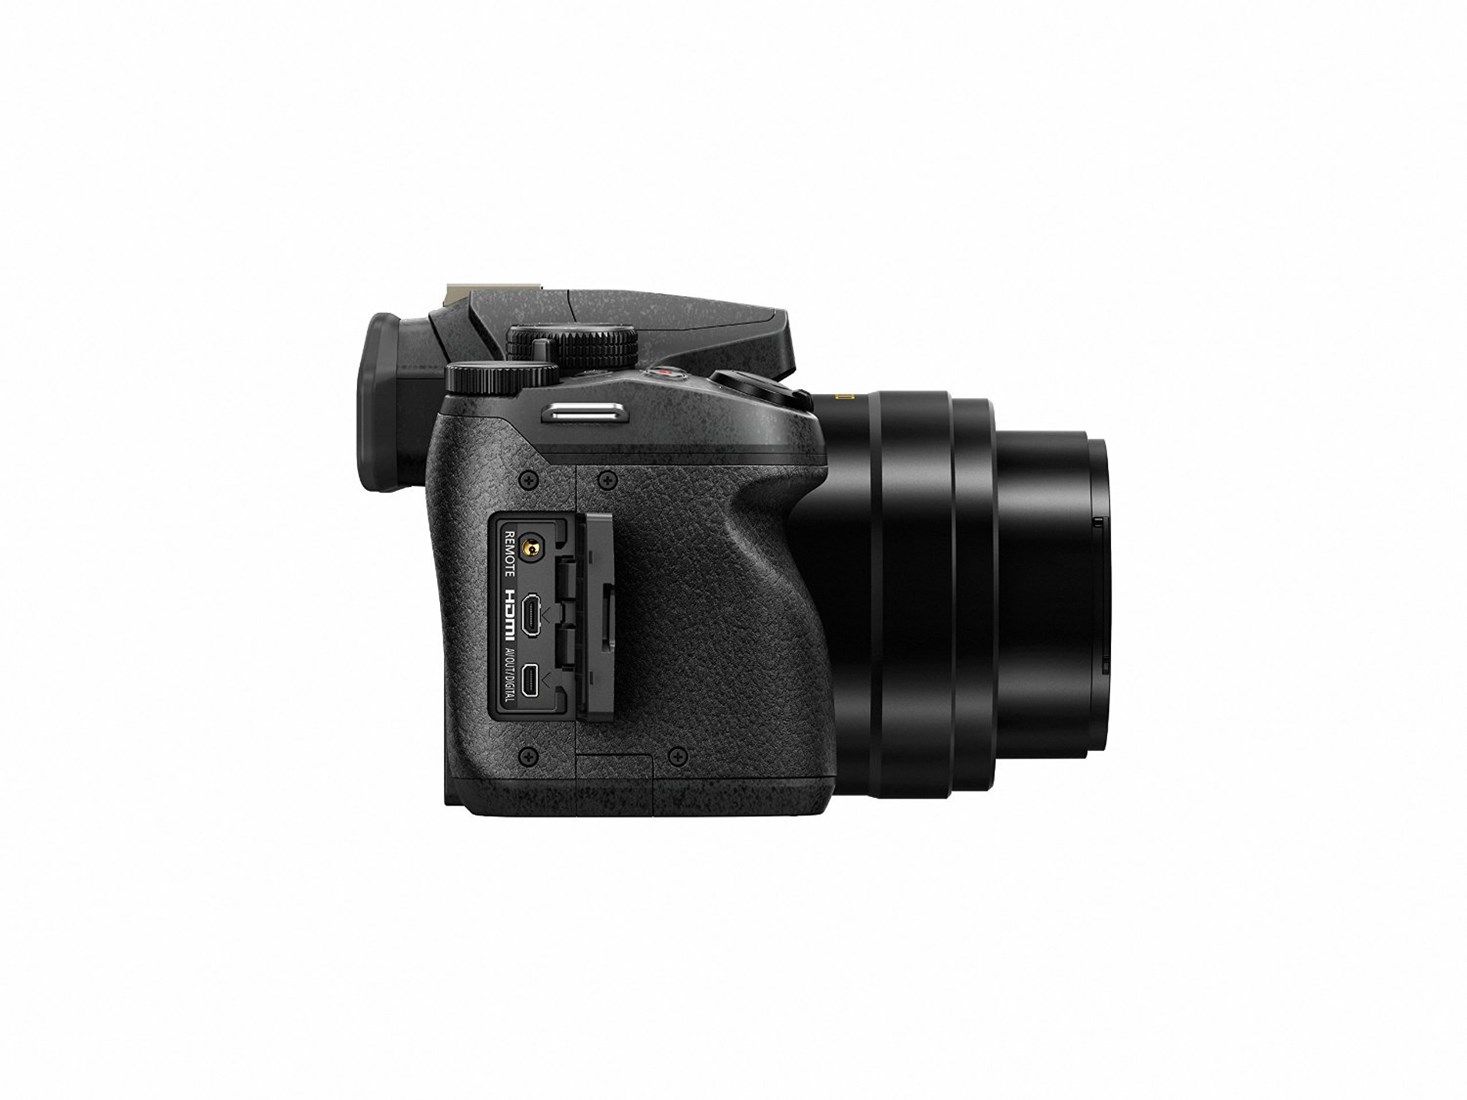 Panasonic LUMIX DMC-FZ330 Bridge camera